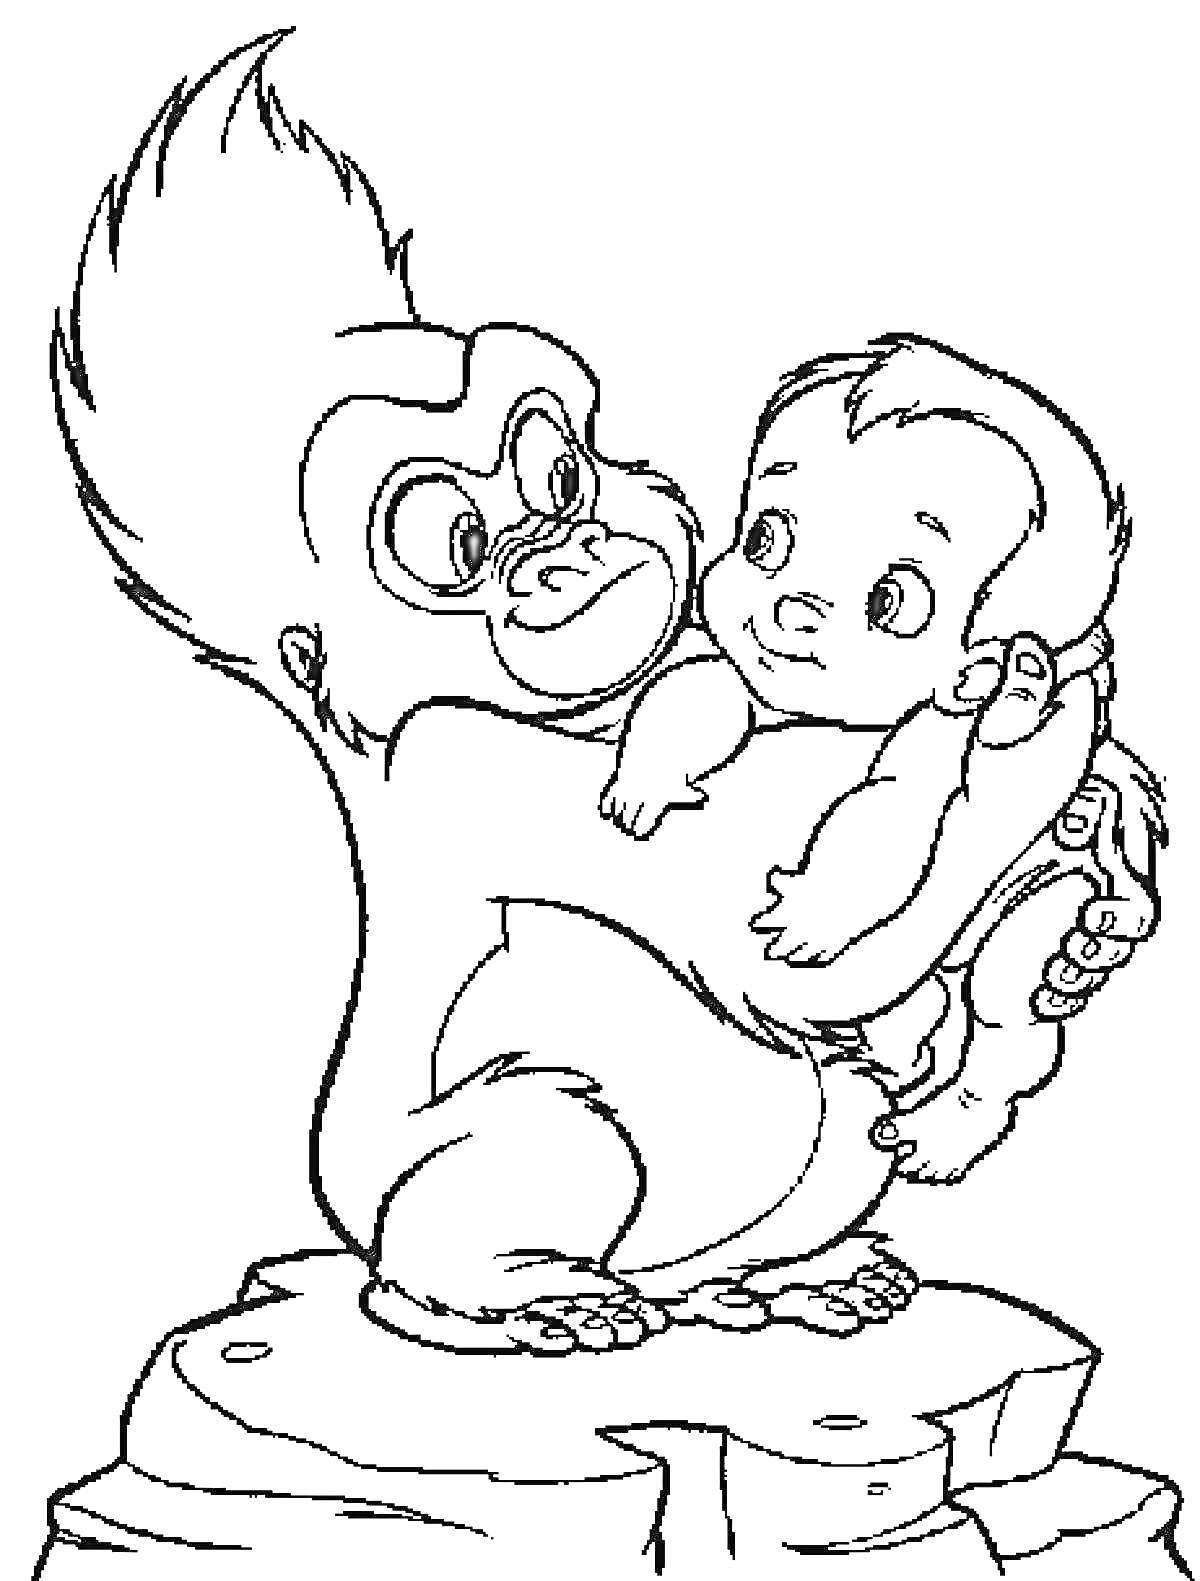 Детеныш гориллы держит младенца Тарзана на скале